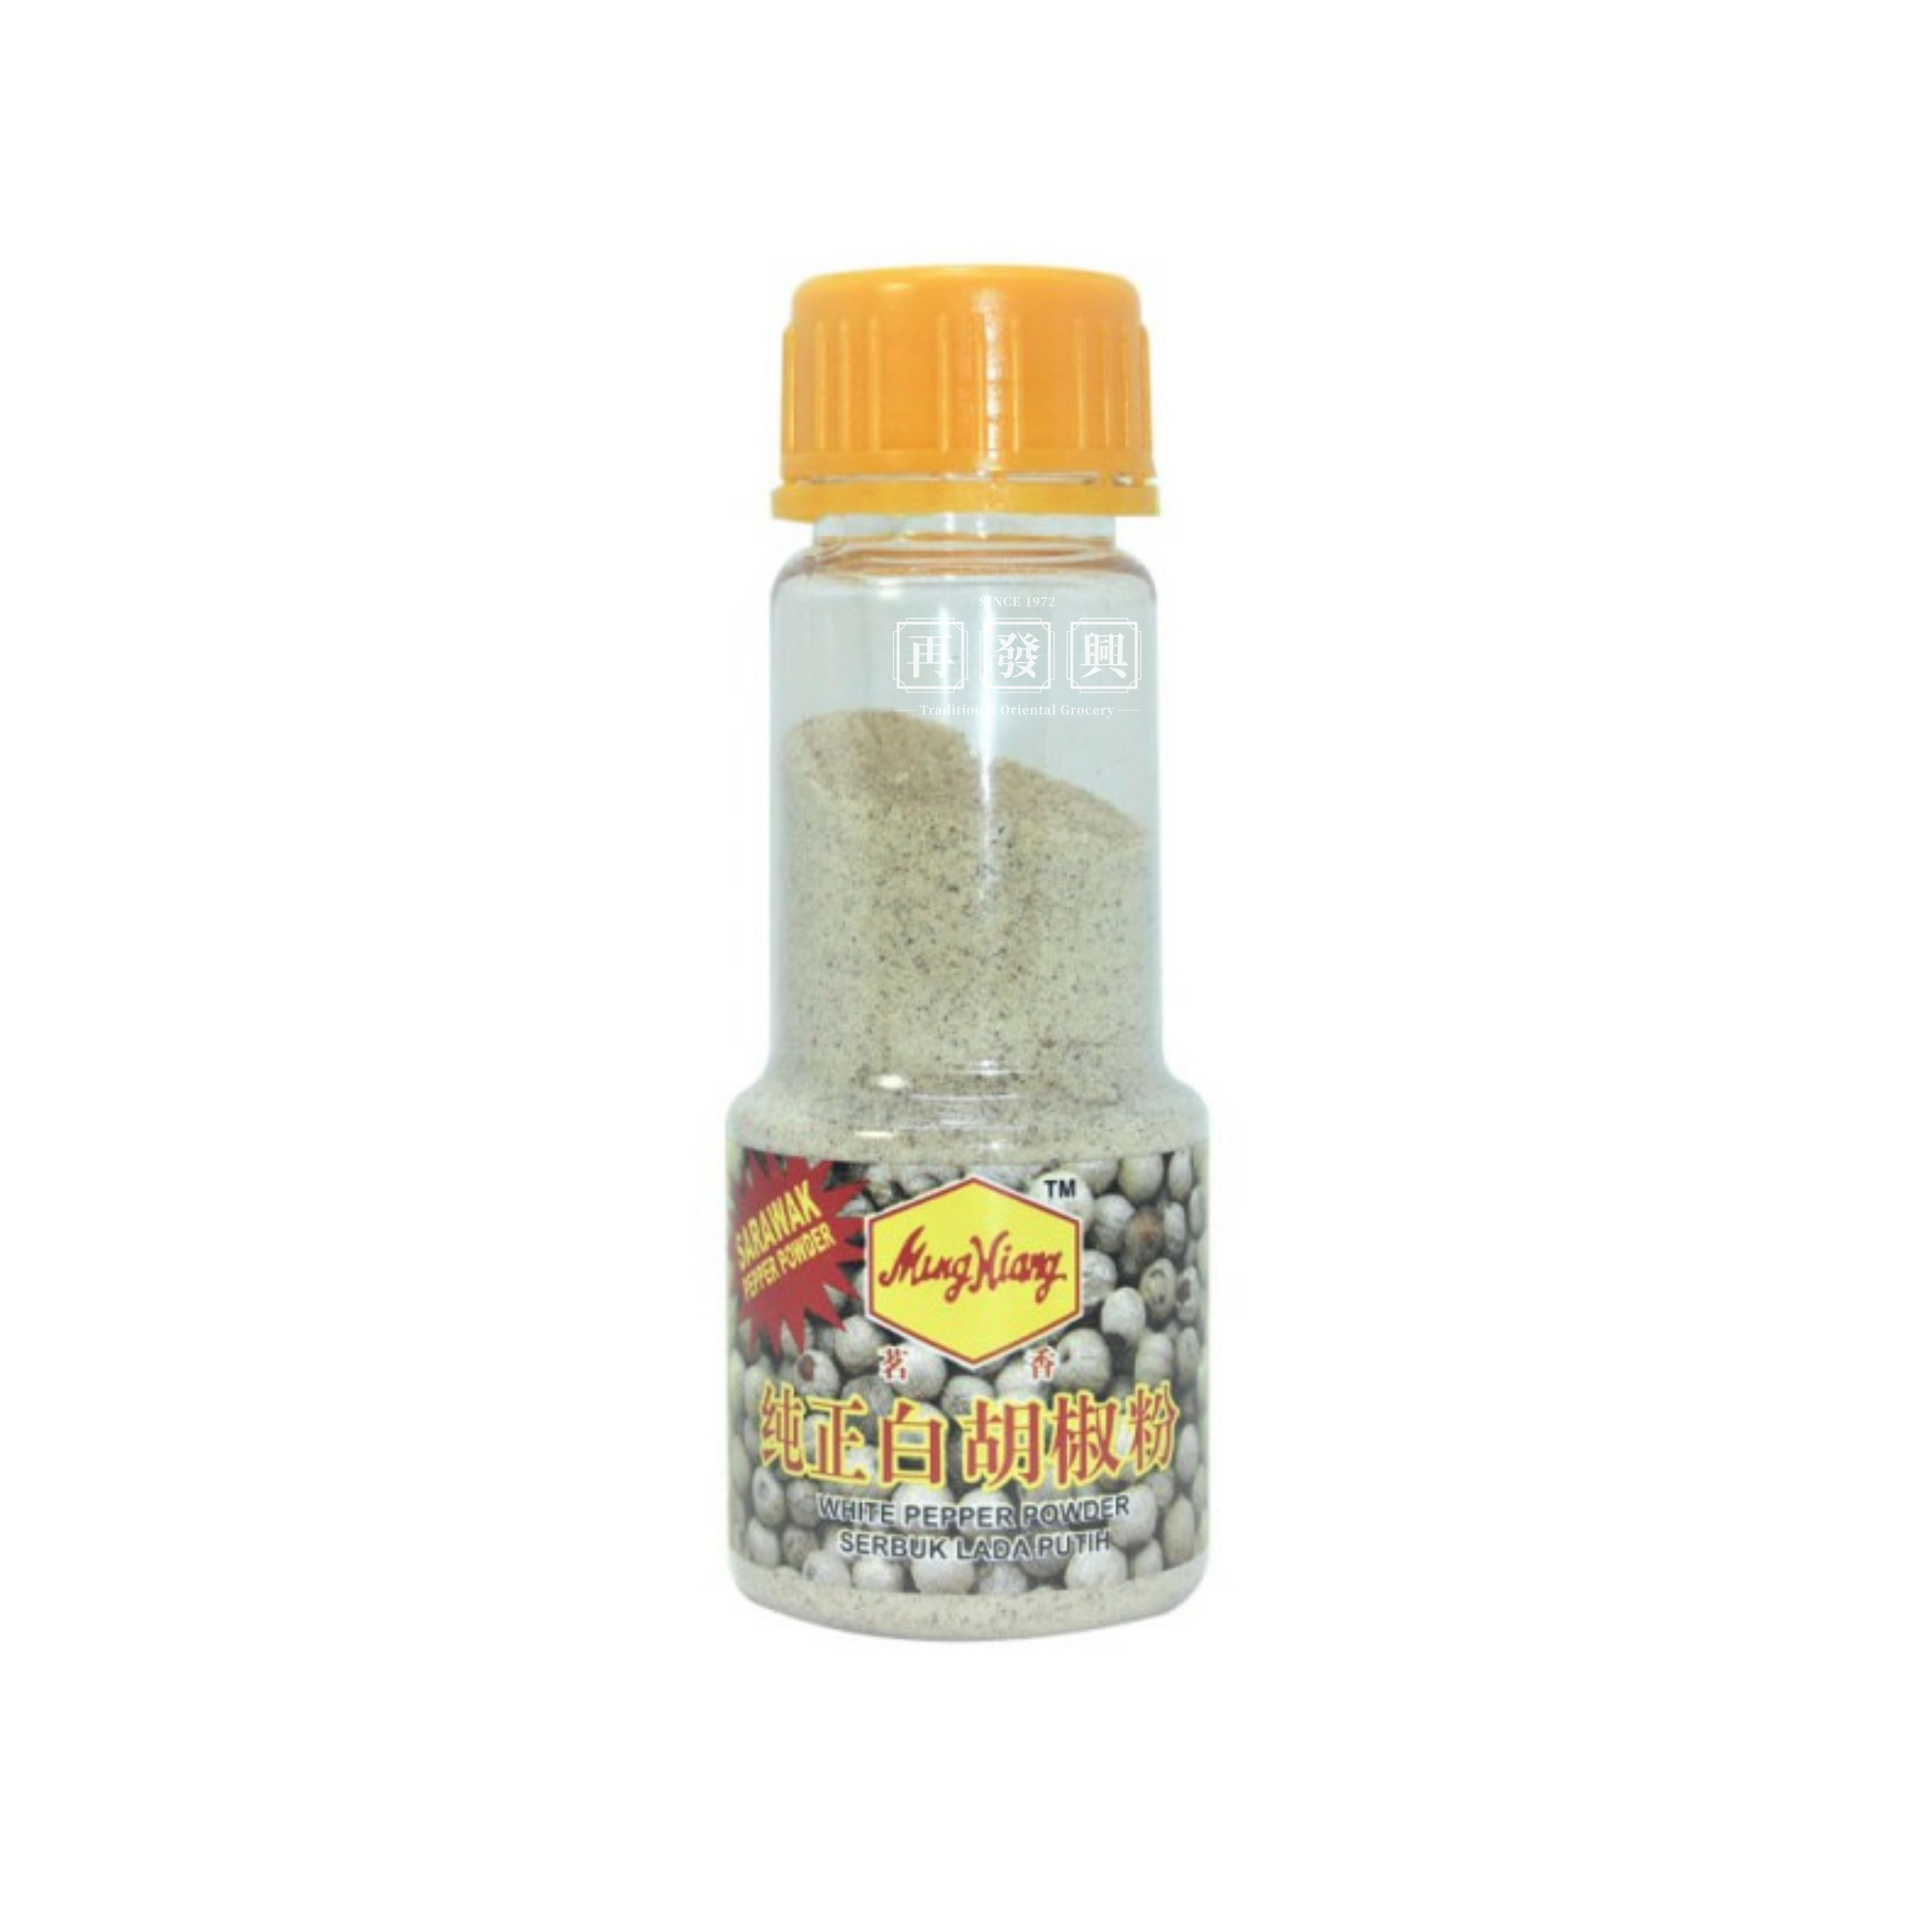 Ming Xiang White Pepper Powder 50g